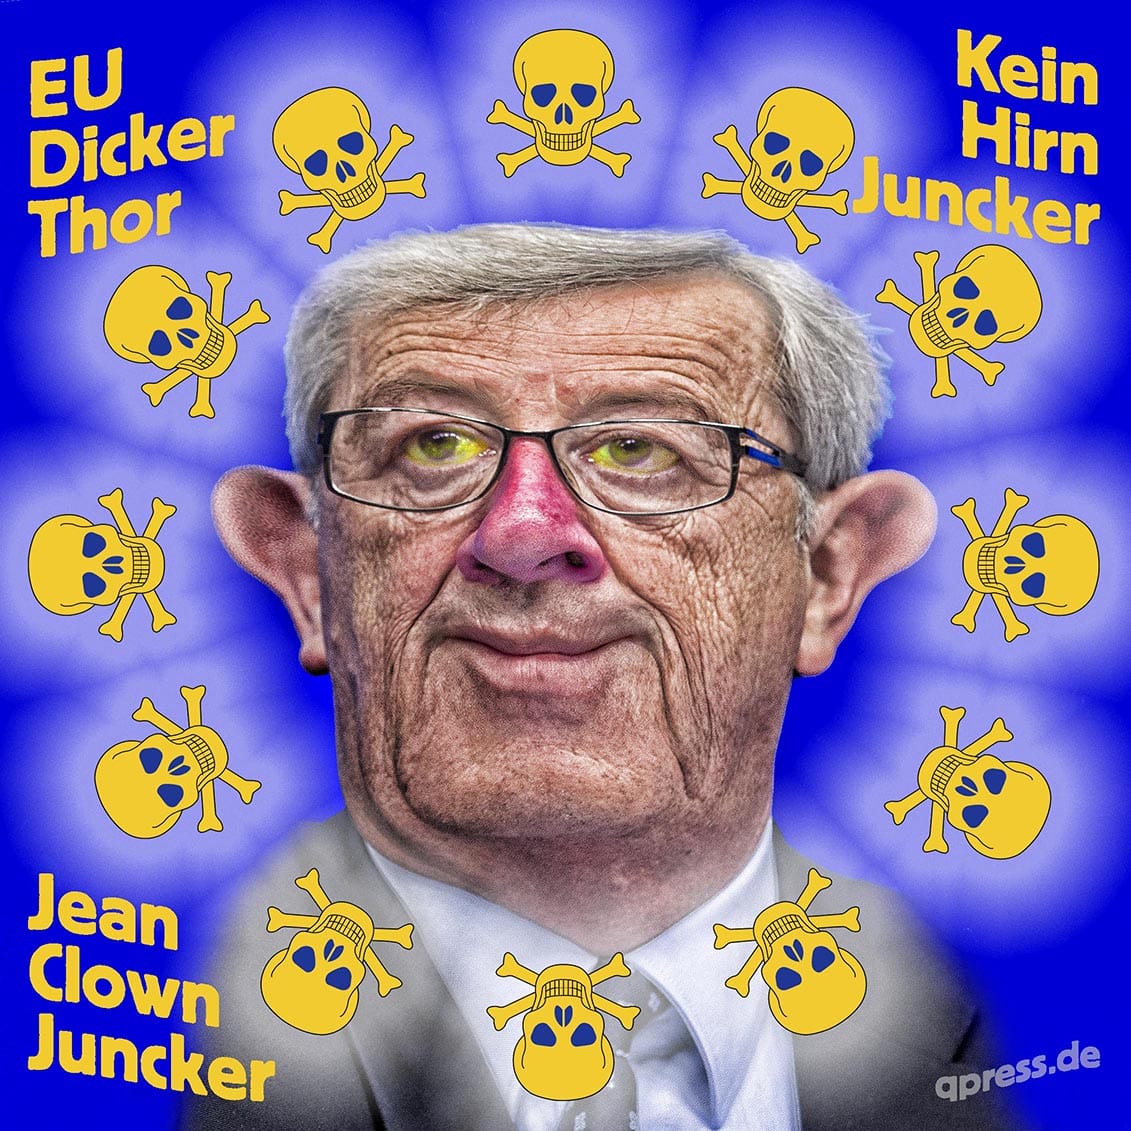 Jean-clown-claude-juncker-EU-kommission-diktator-kein-hirn-machtanspruch-Diktatur-dicker-thor-Eeuropa-Missbrauch